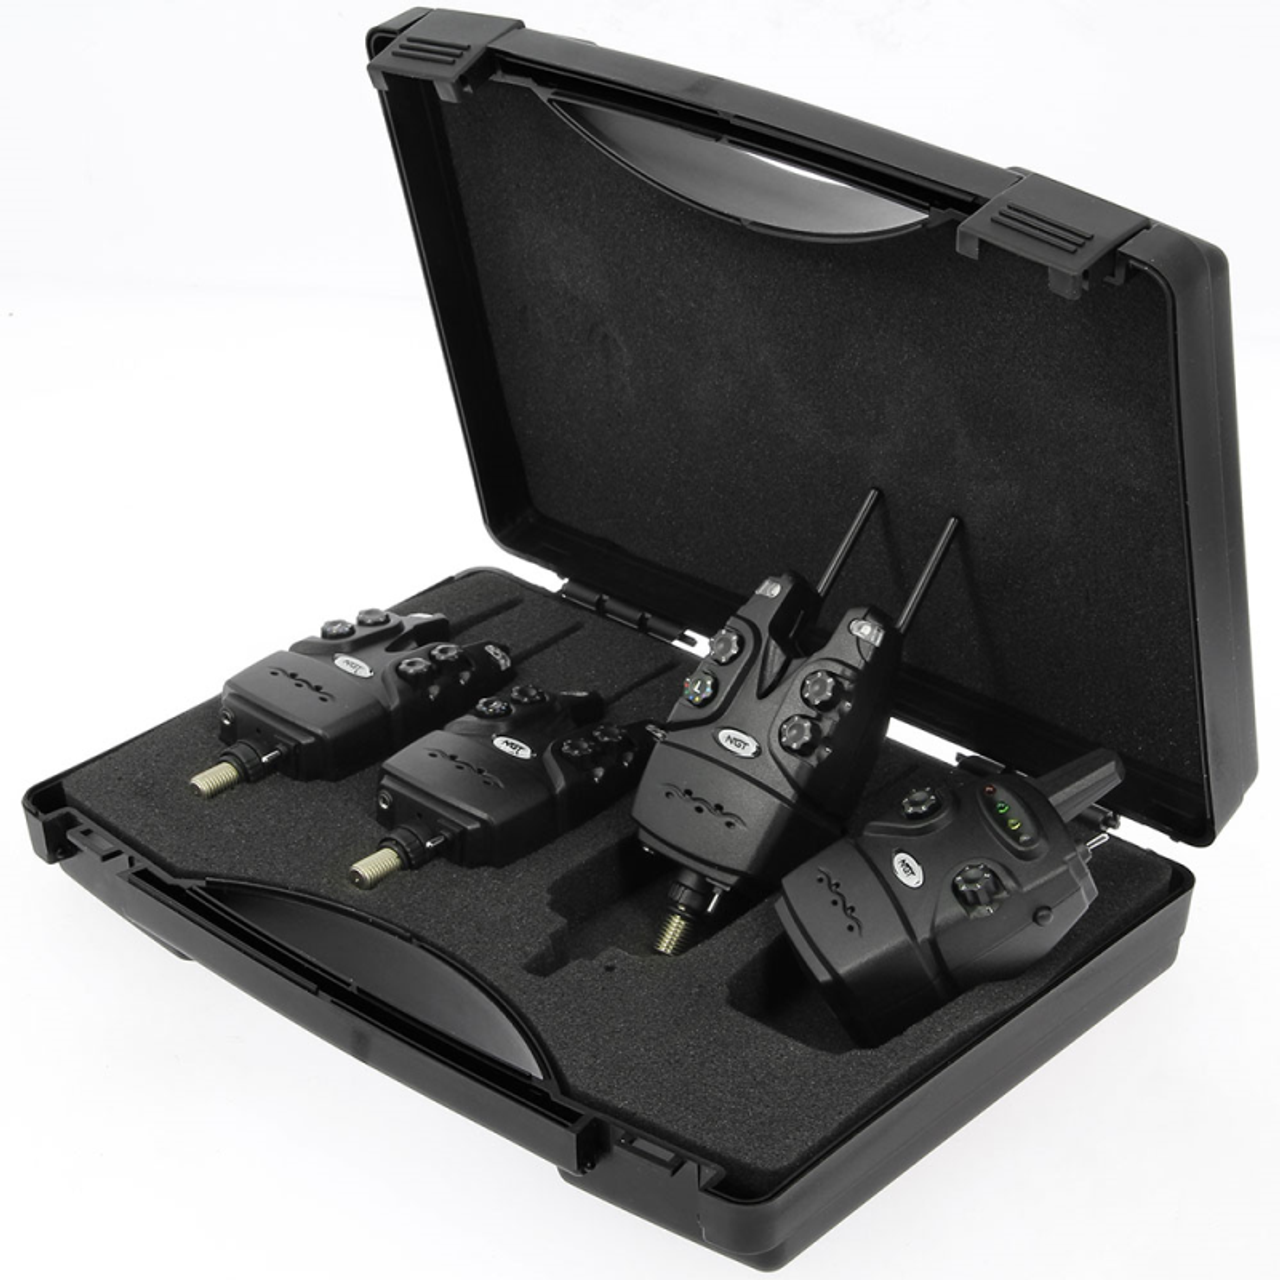 NGT Dynamic Bite Alarm Set w/Receiver & Carry Case (3 Rod Set)